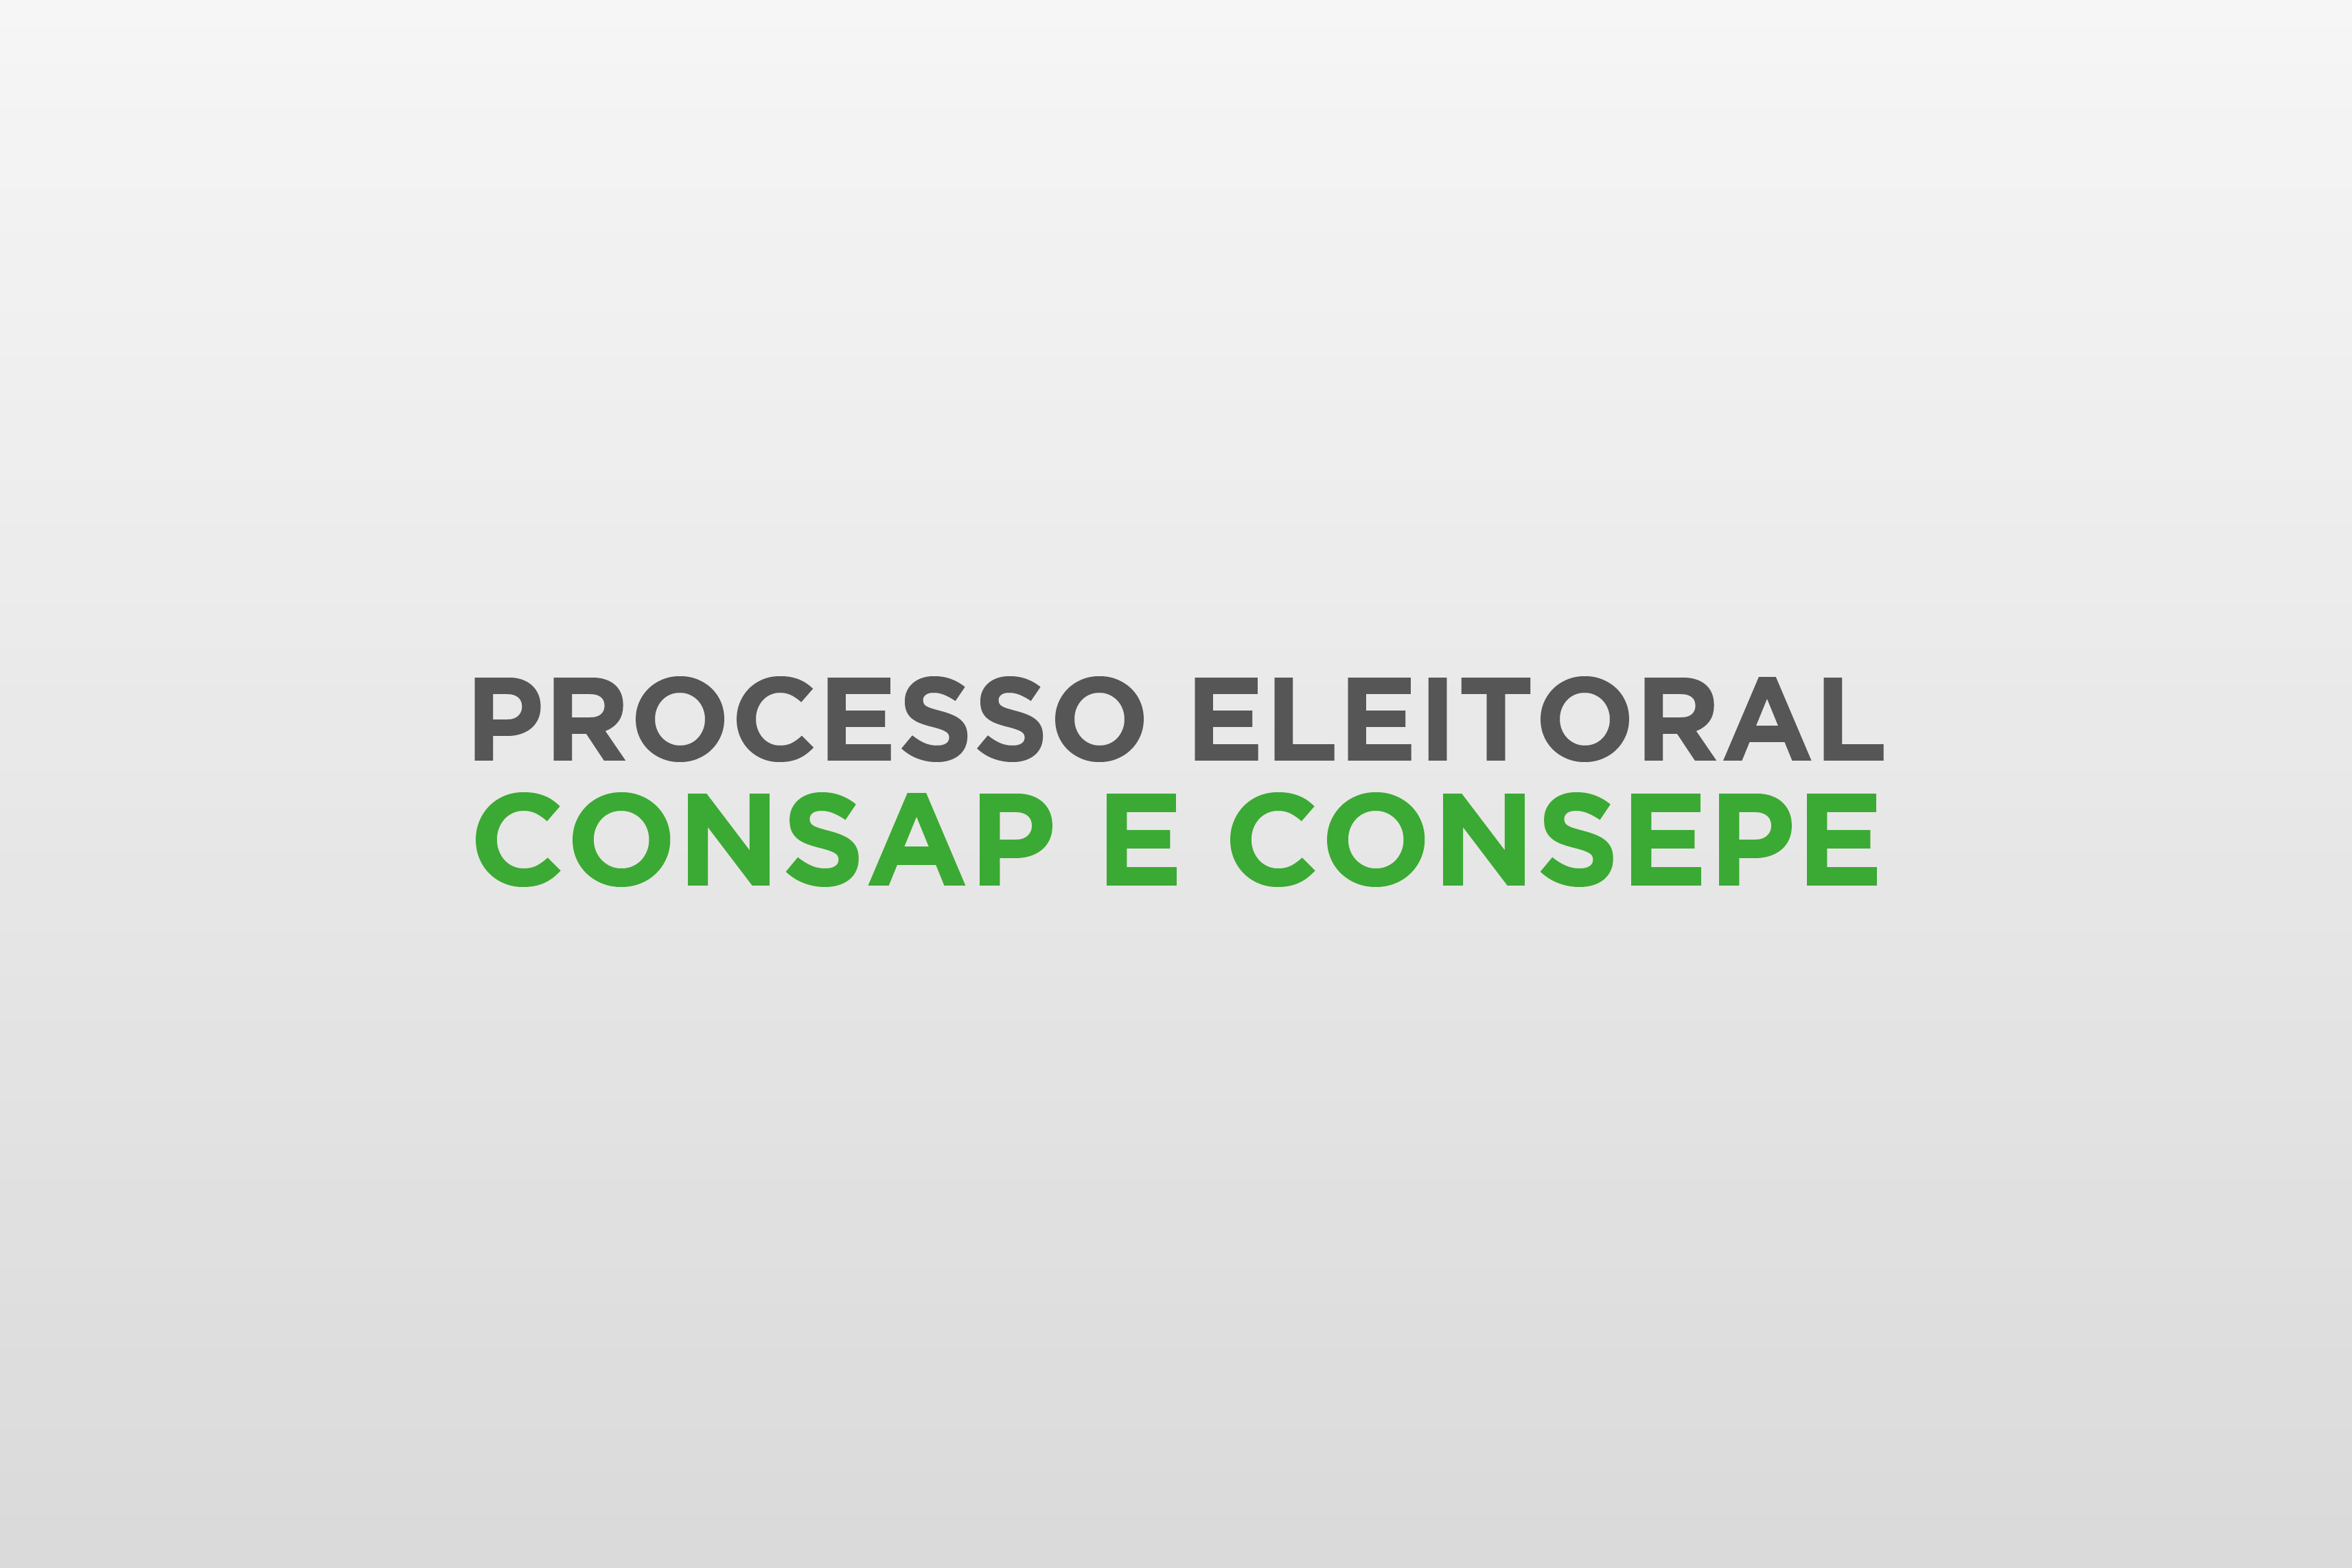 "Processo eleitoral Consap e Consepe"